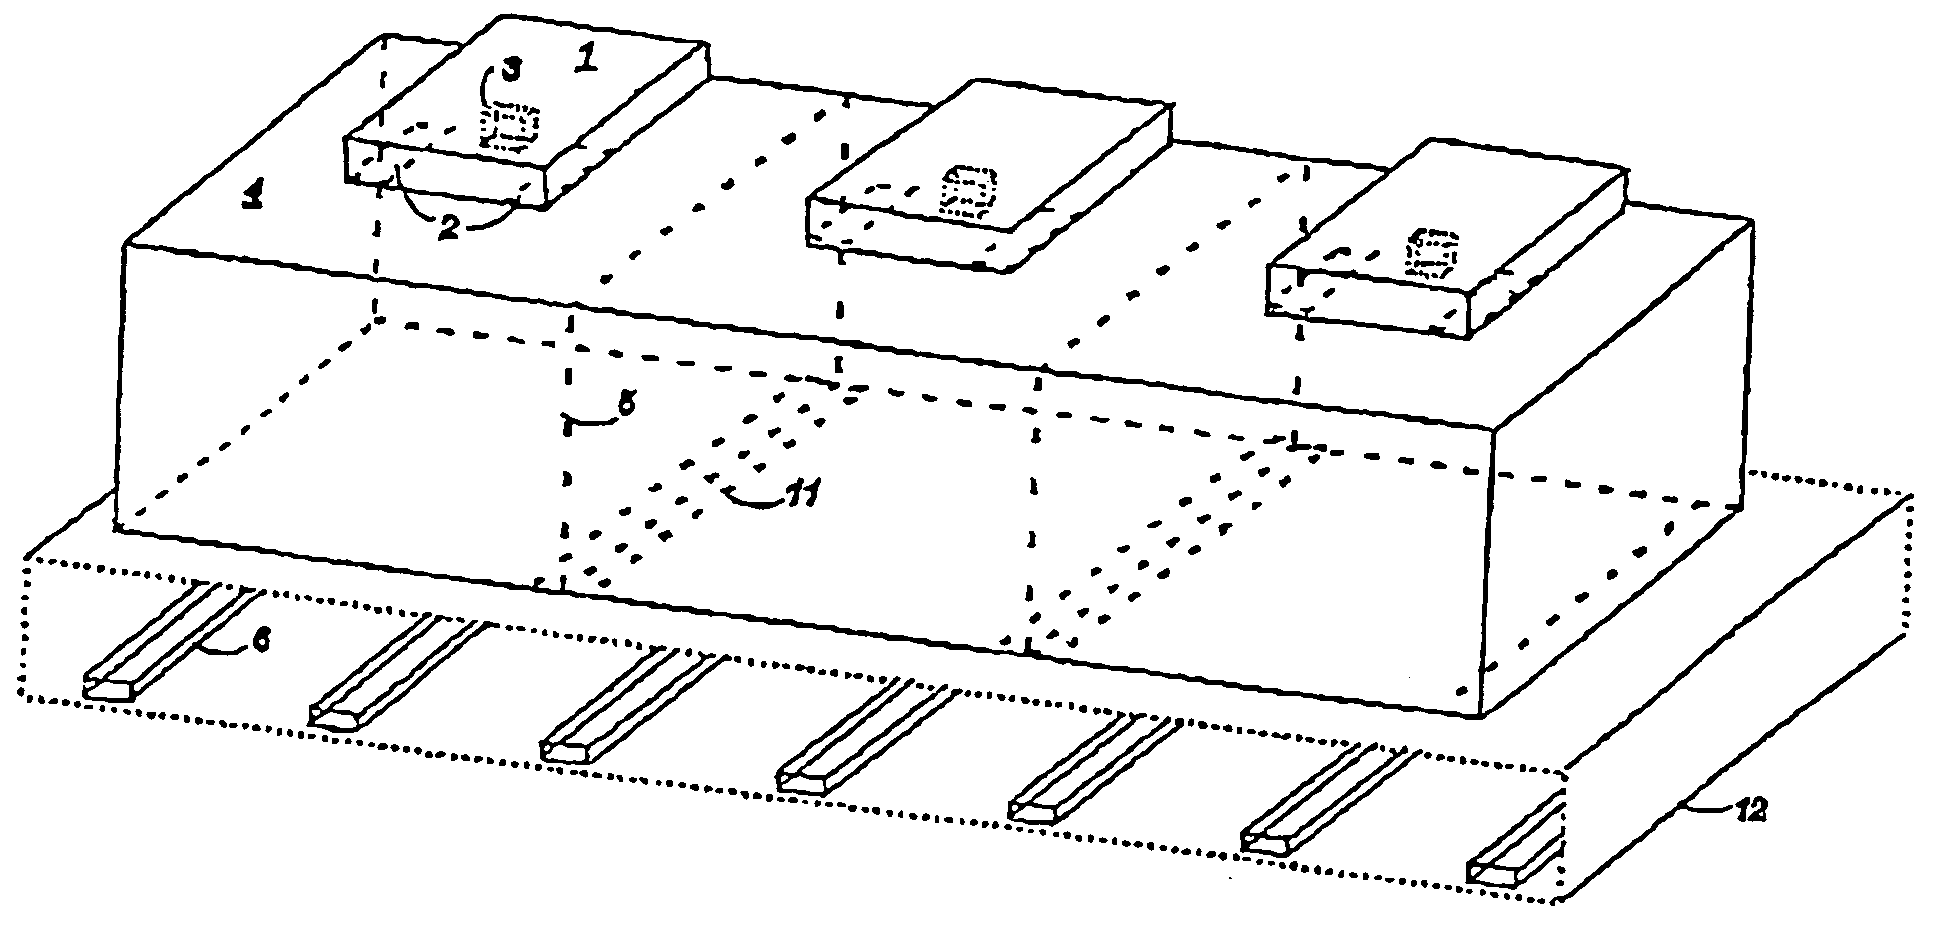 Hybrid rectangular heating applicators